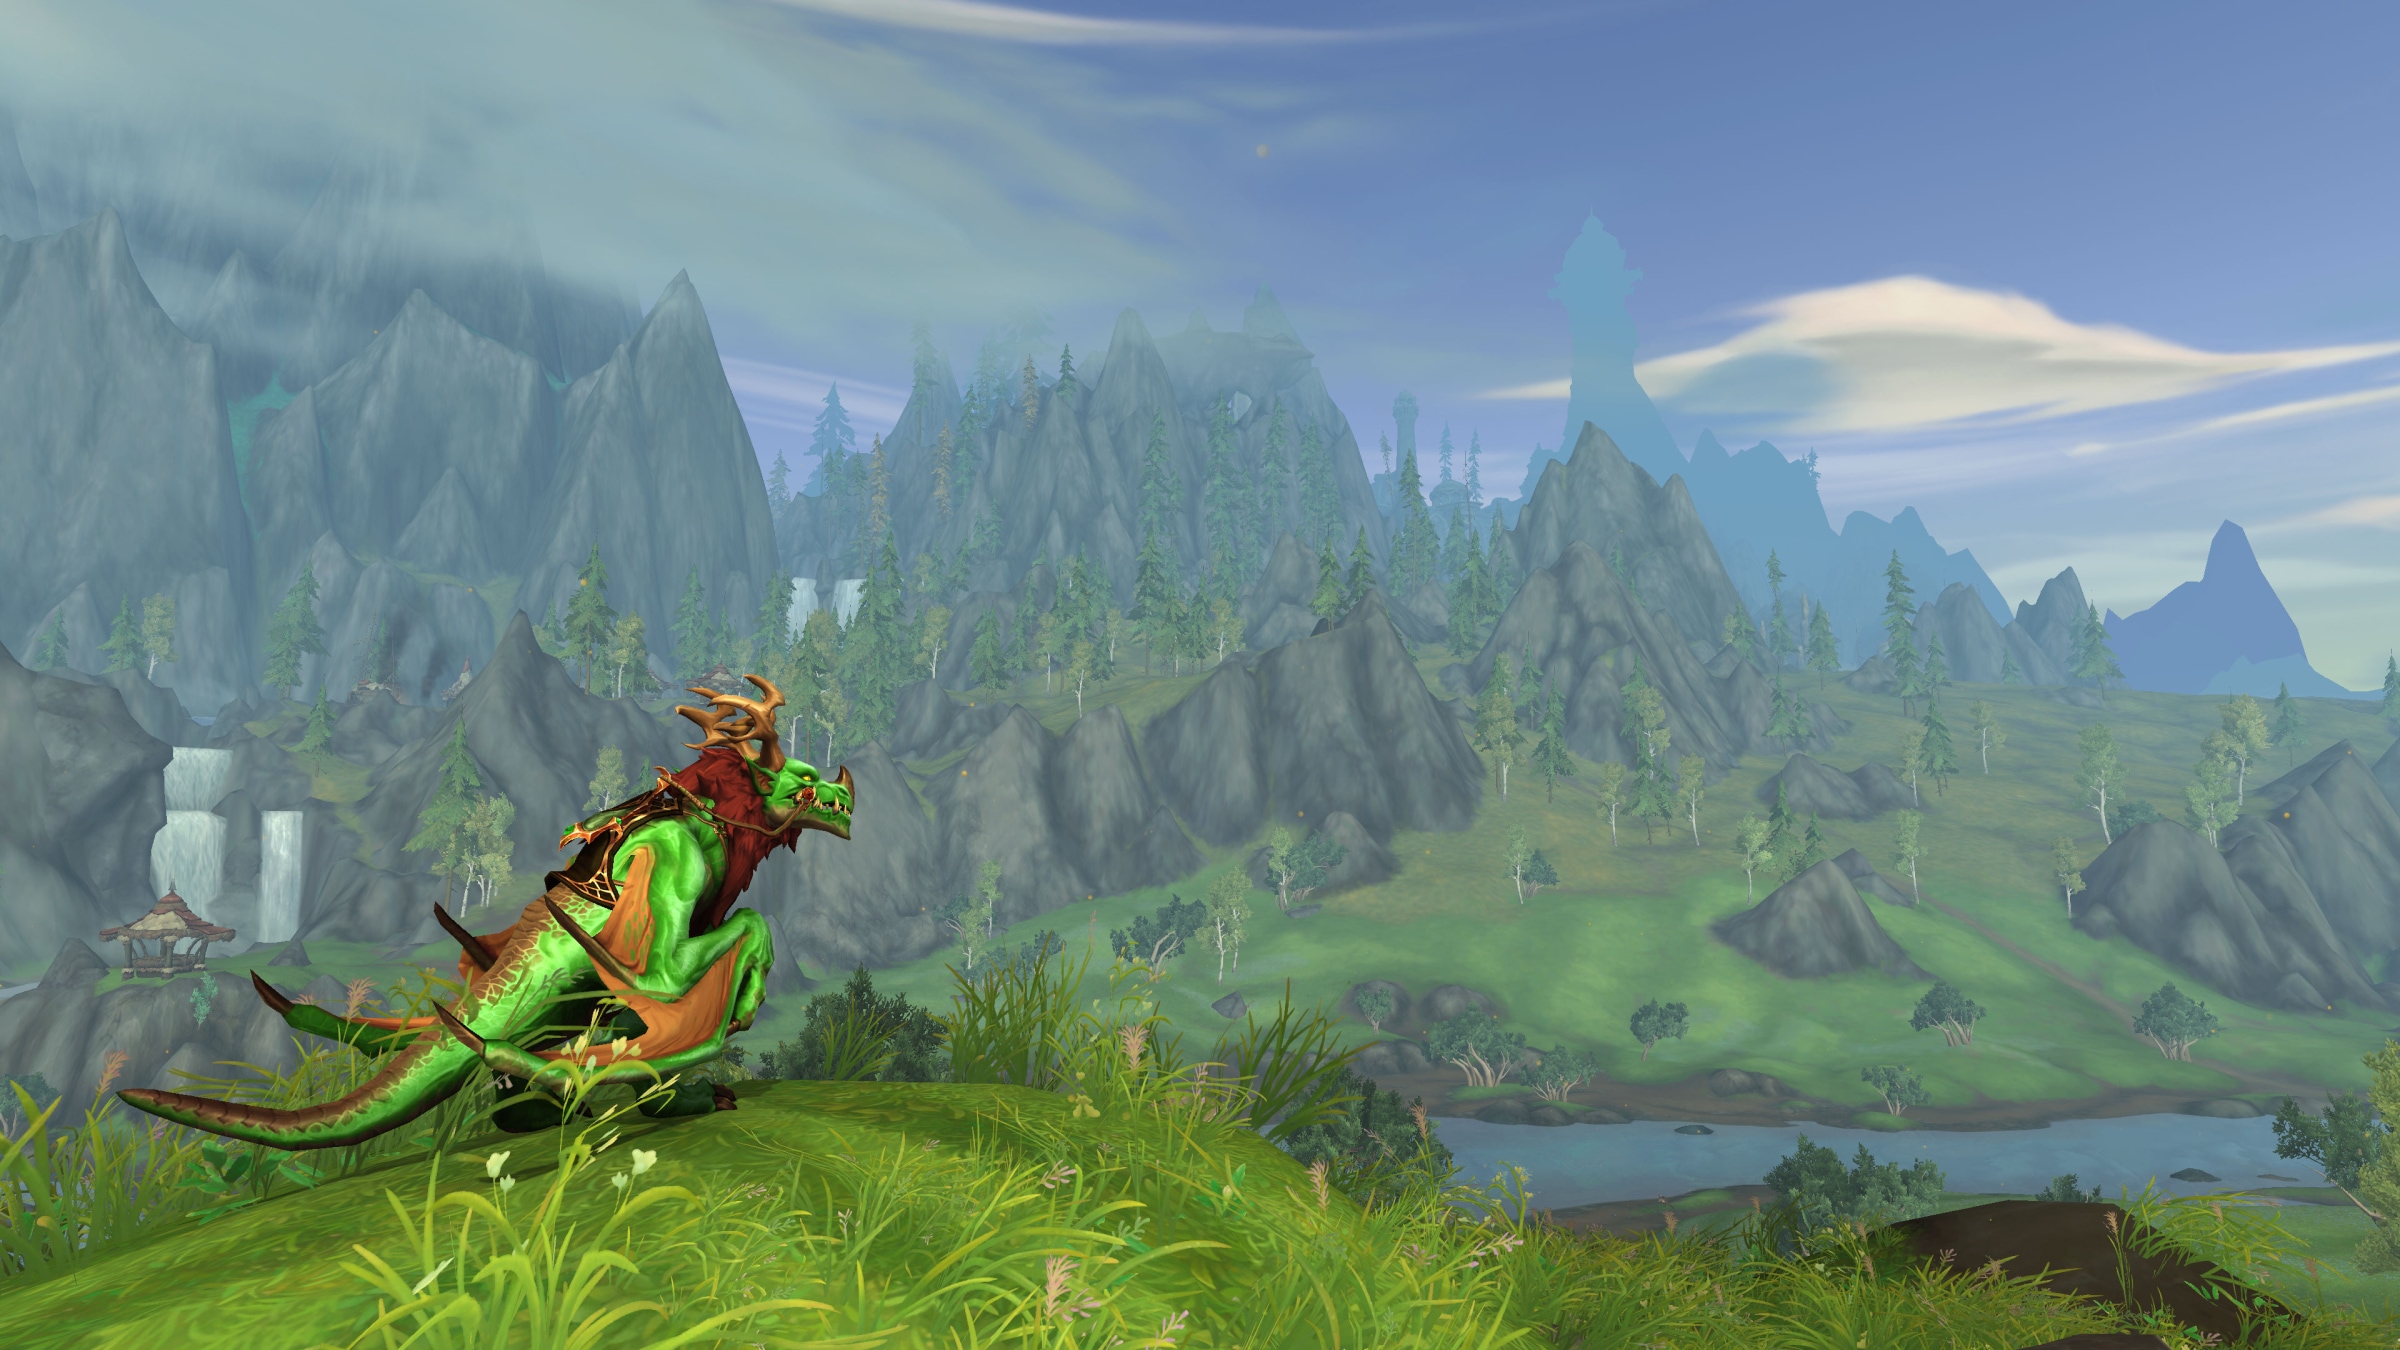 World of Warcraft News and Development Updates